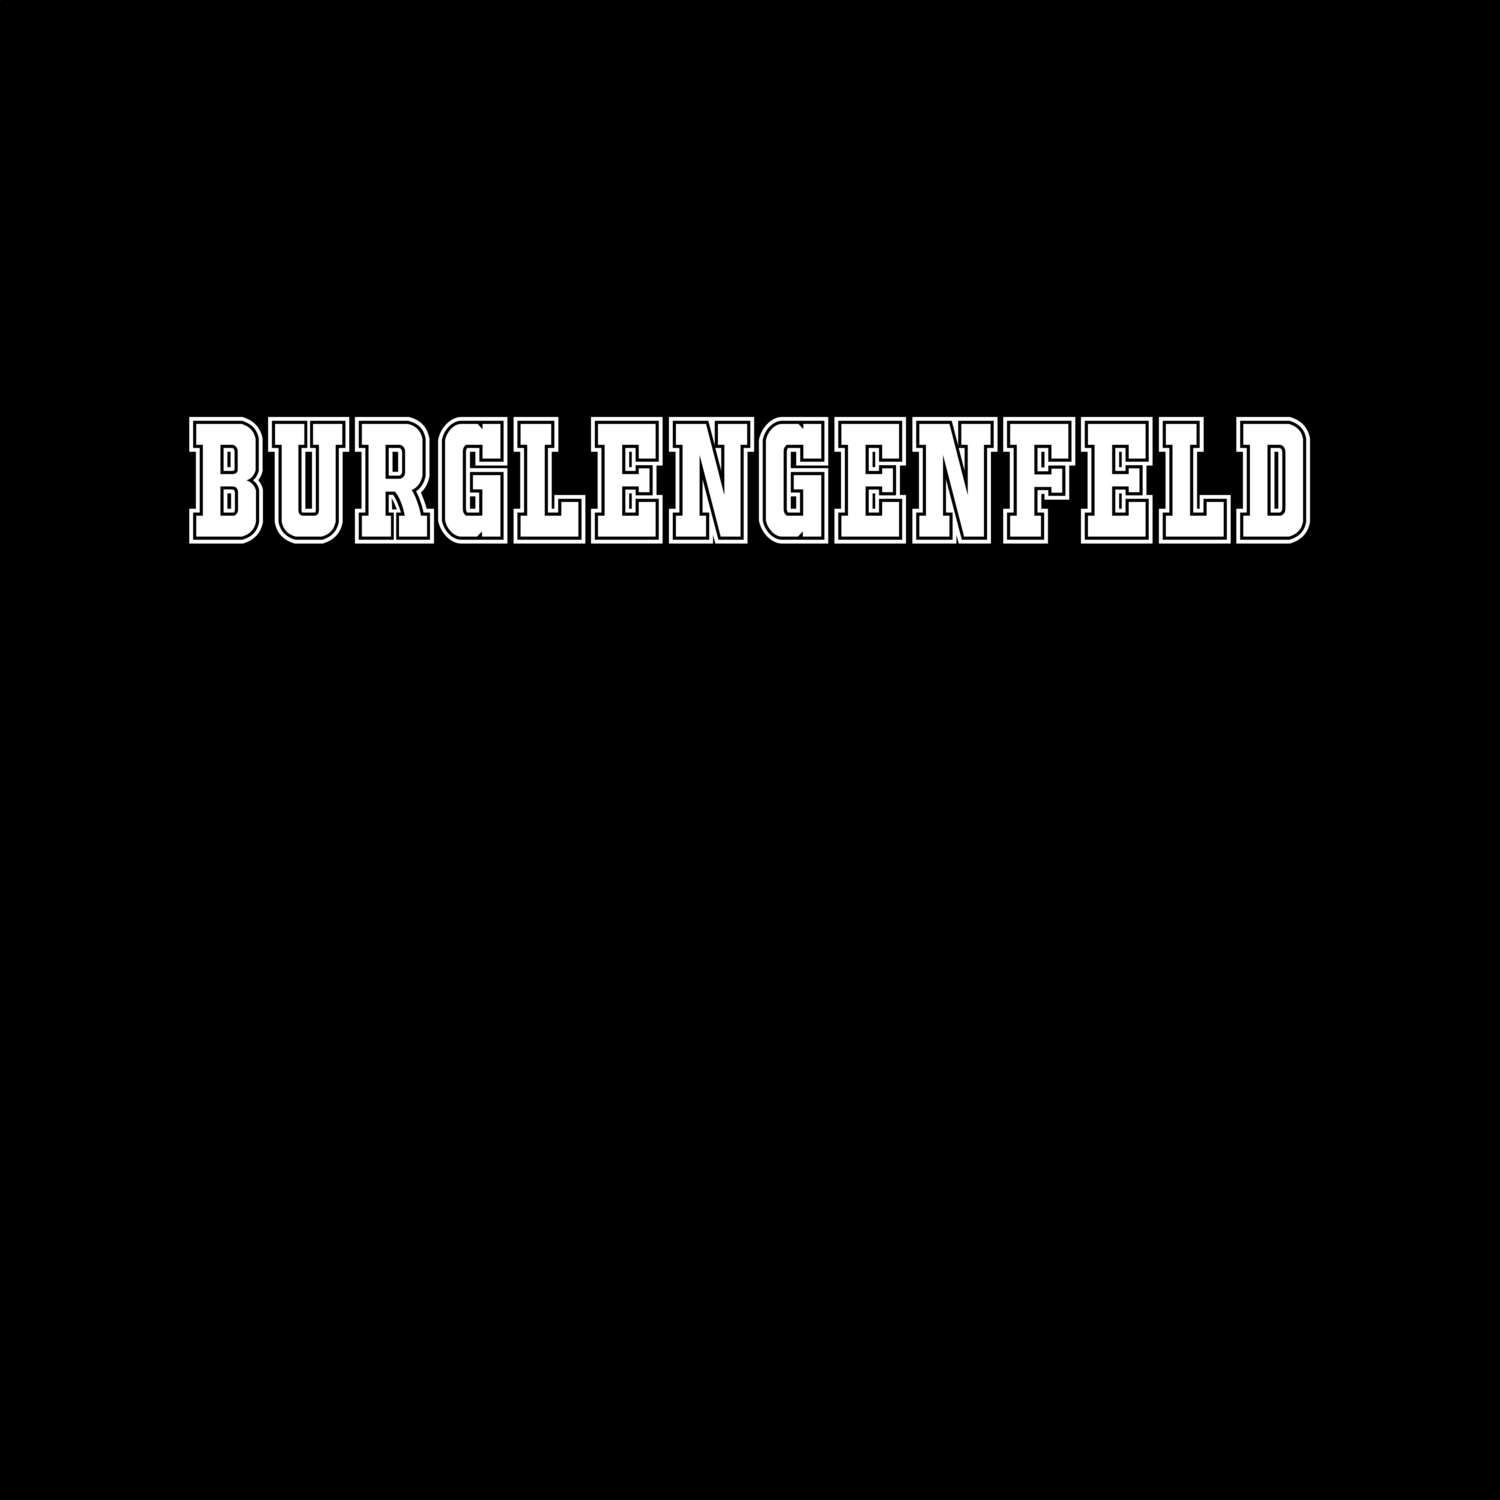 Burglengenfeld T-Shirt »Classic«